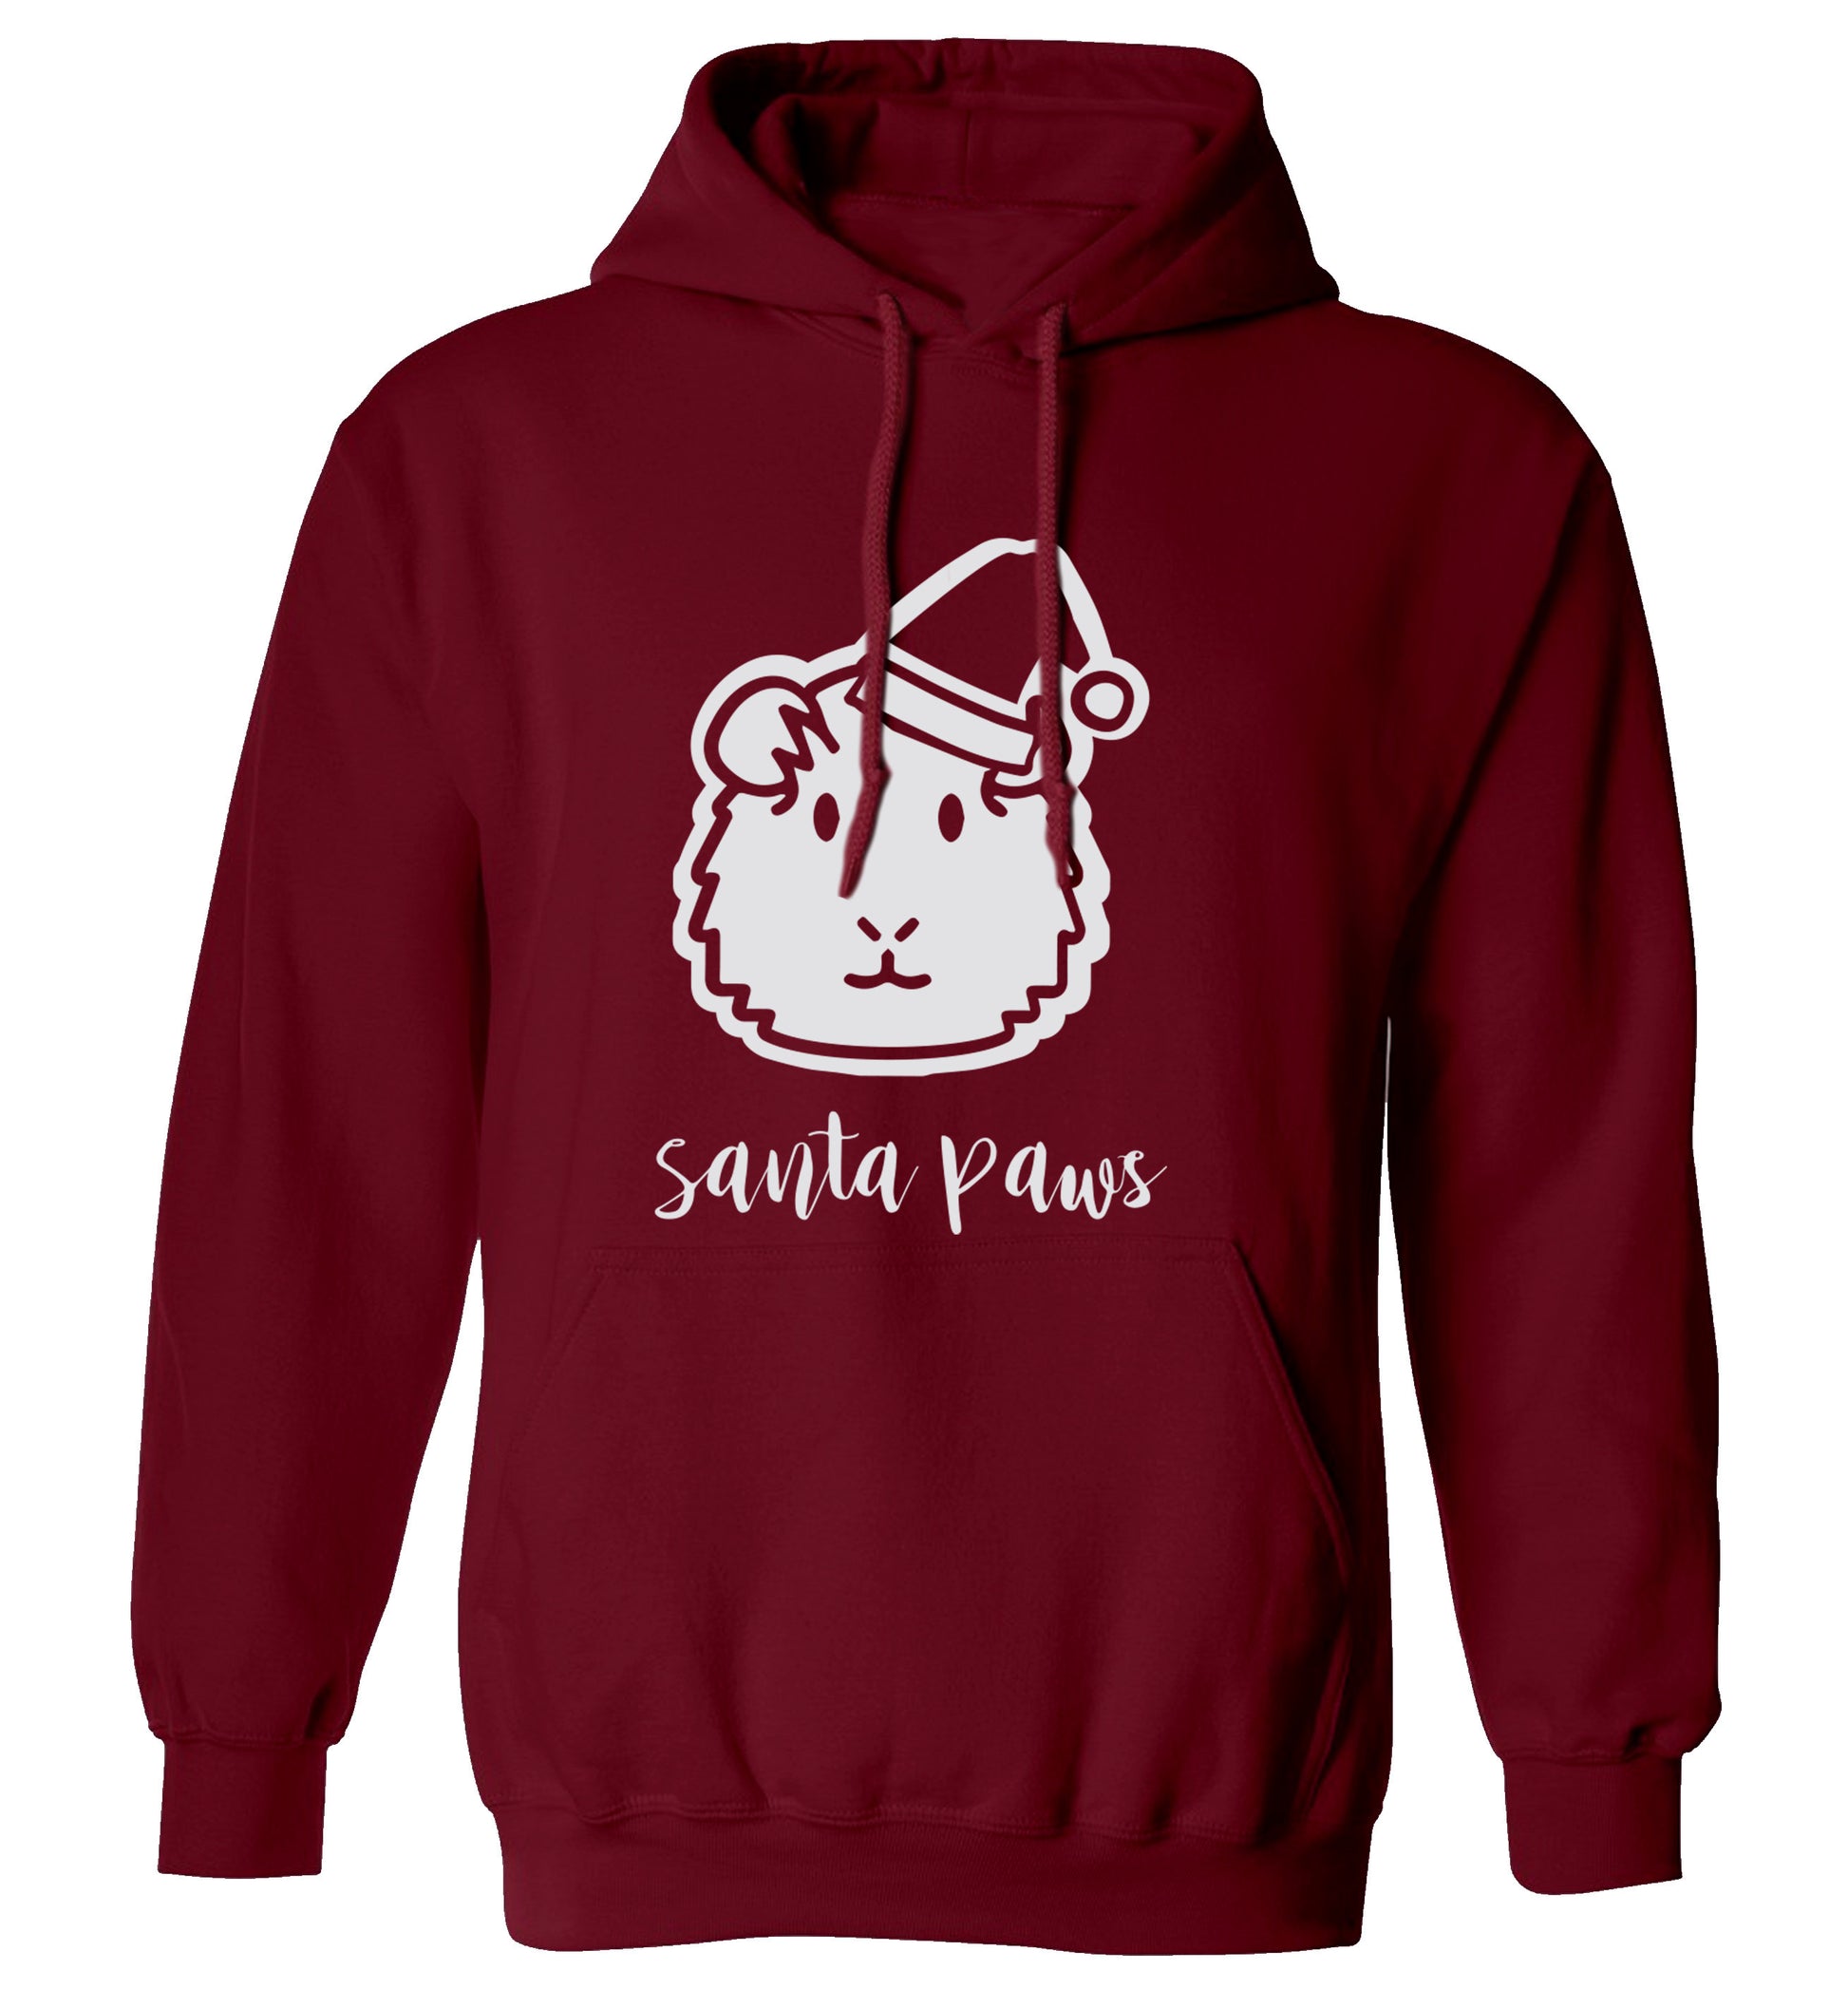 Guinea pig Santa Paws adults unisex maroon hoodie 2XL